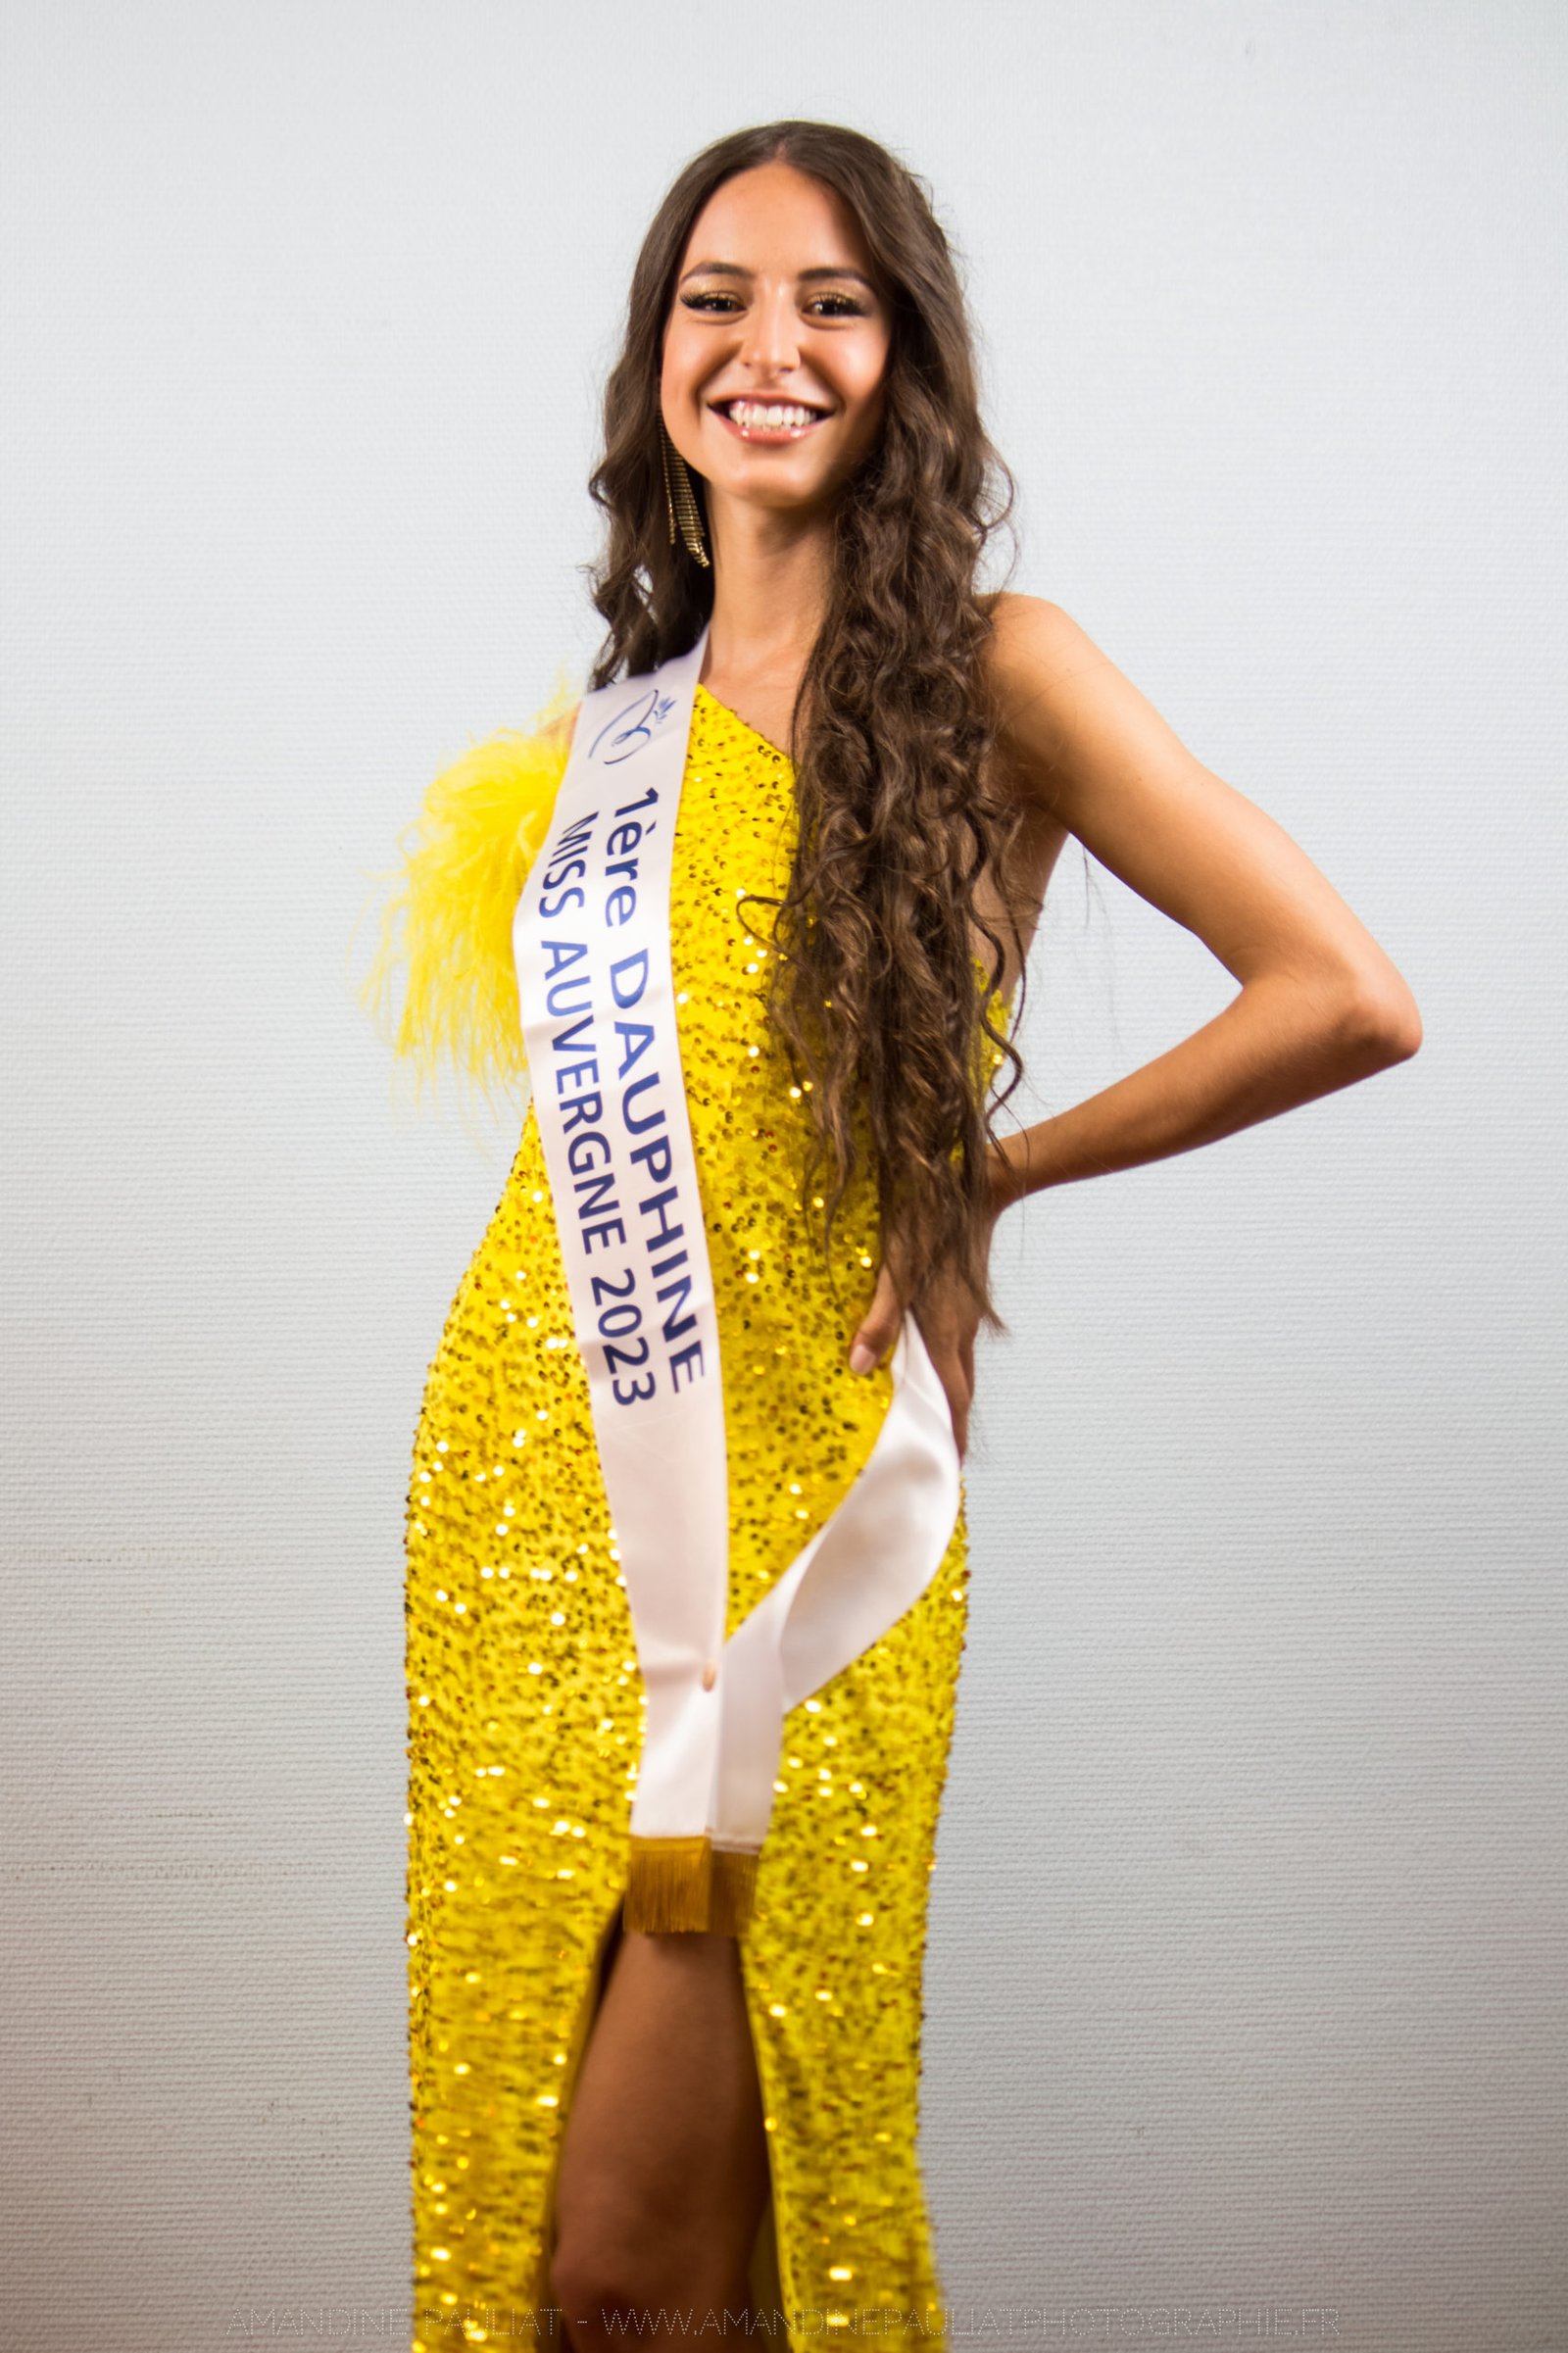 Perrine Terpereau Miss Auvergne 2023